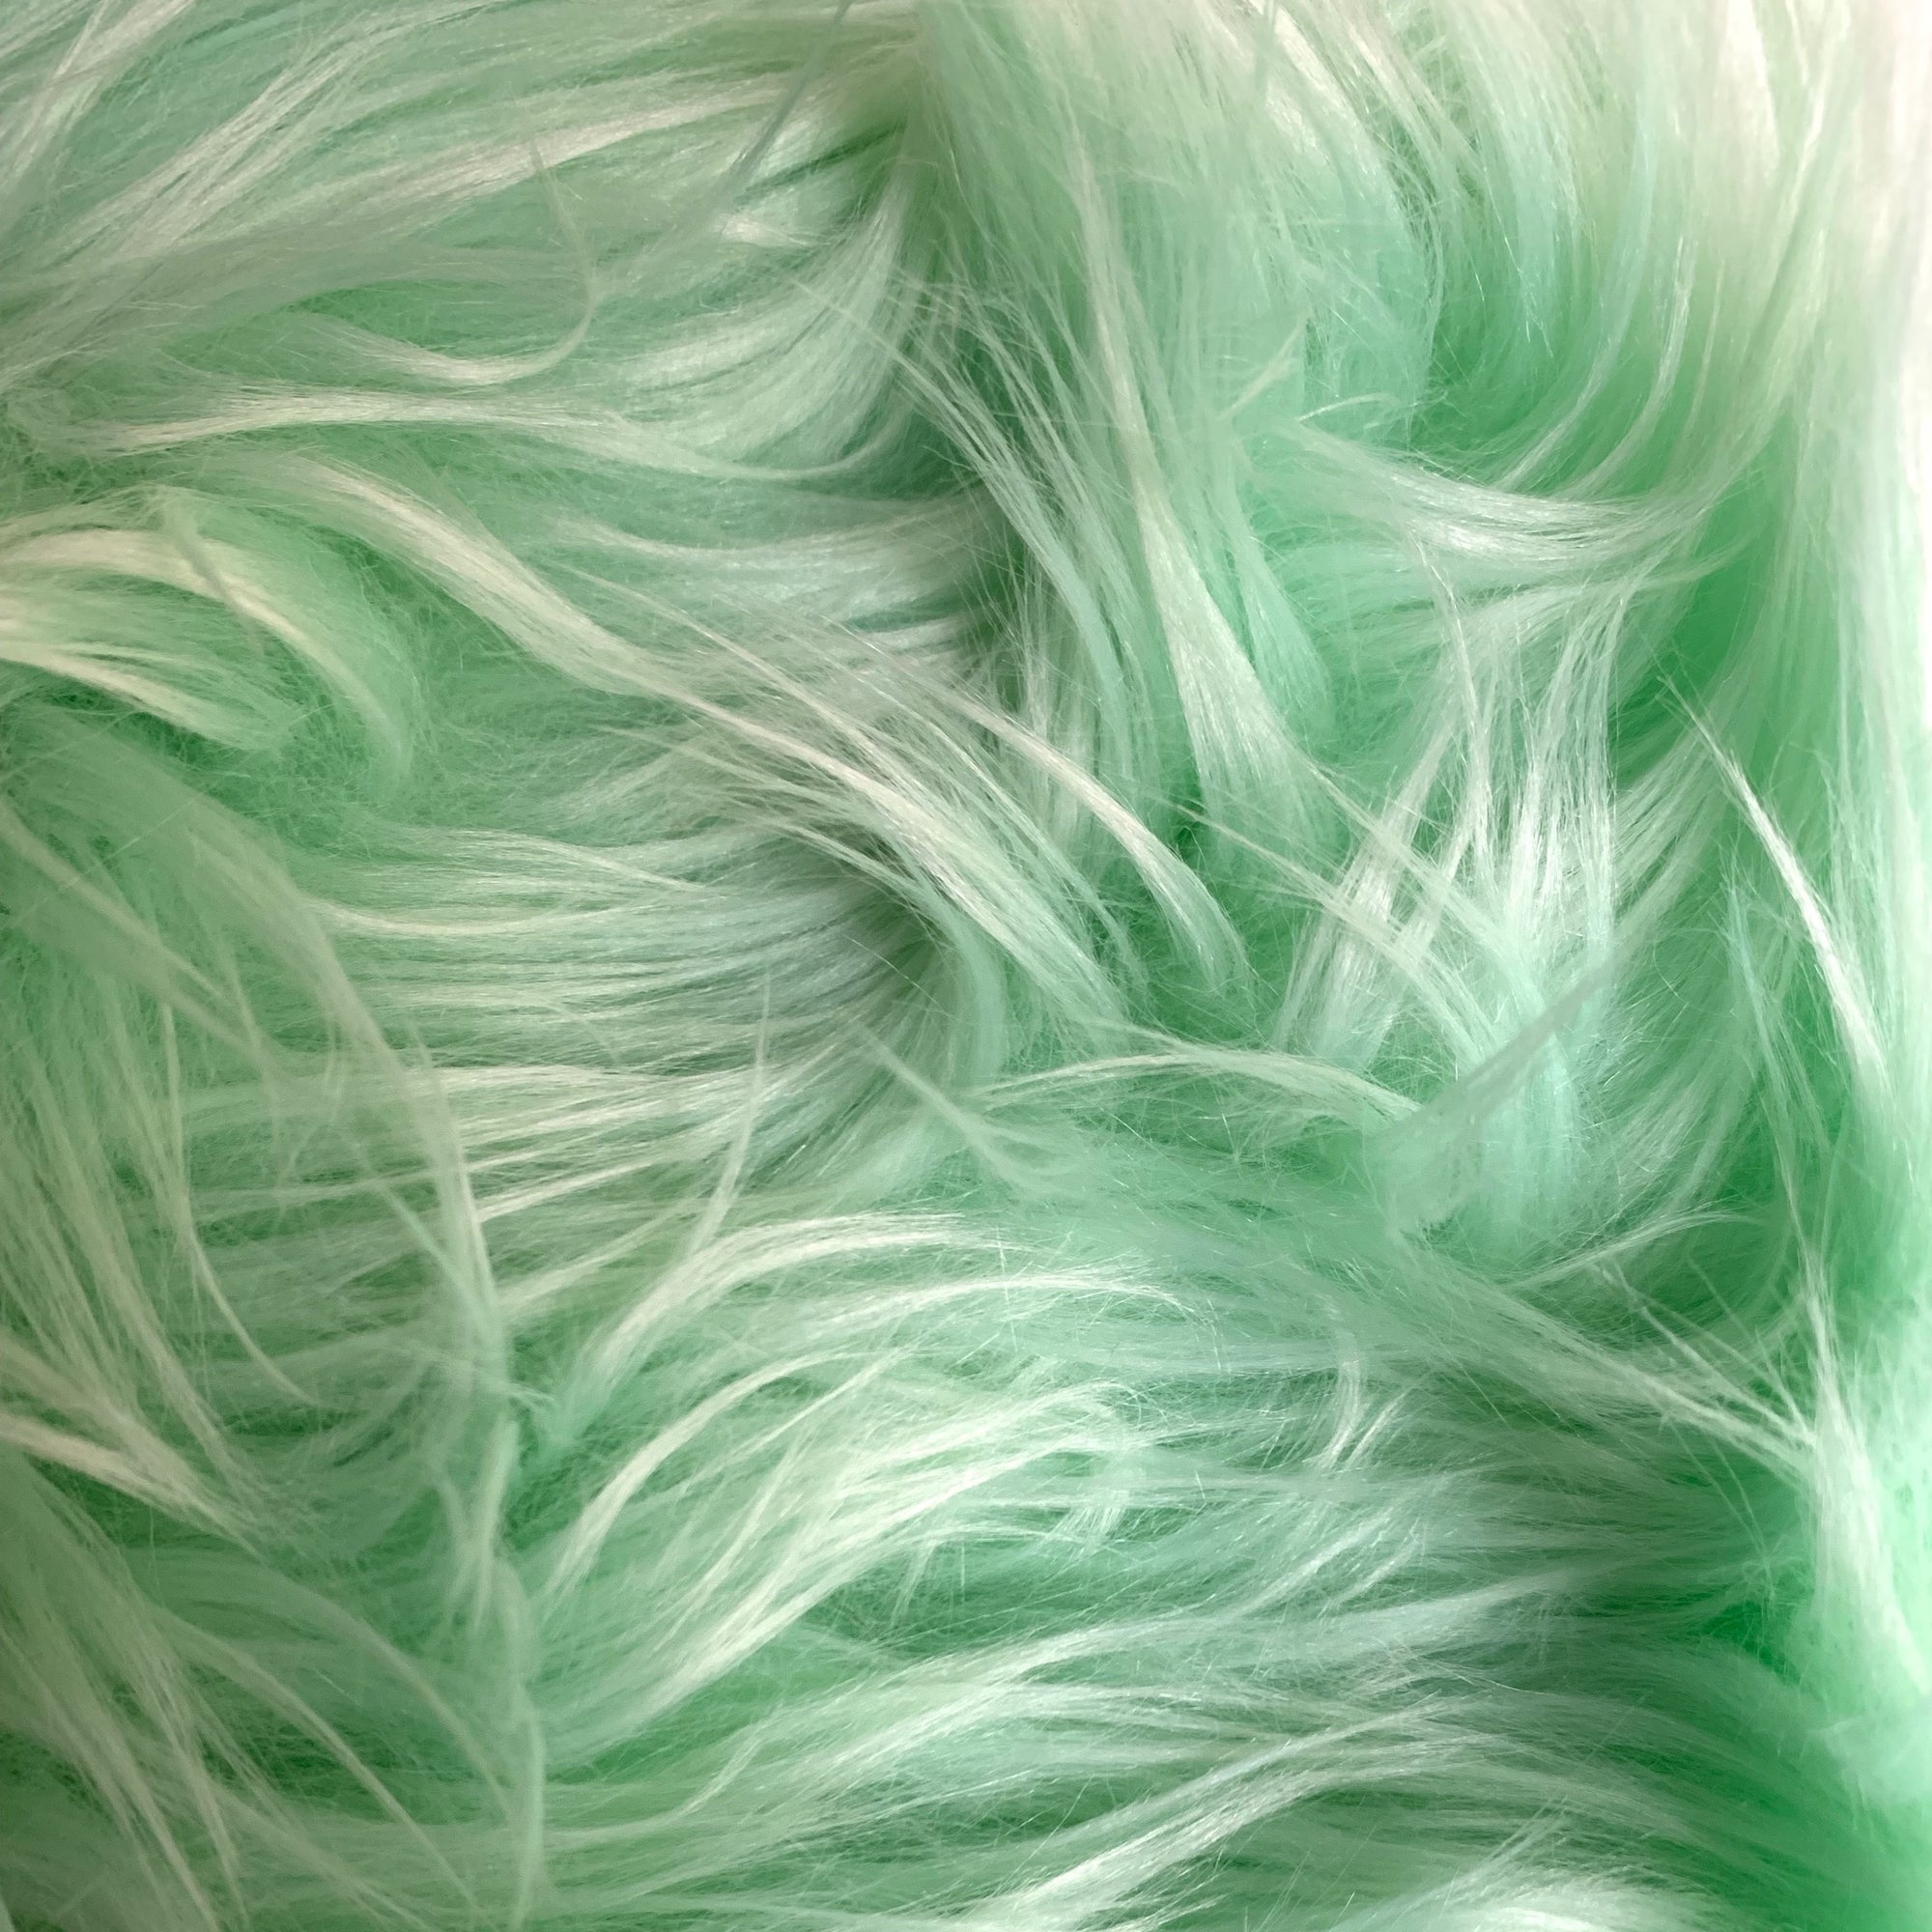 Eden LIGHT MINT GREEN Shaggy Long Pile Soft Faux Fur Fabric for Fursuit, Cosplay Costume, Photo Prop, Trim, Throw Pillow, Crafts